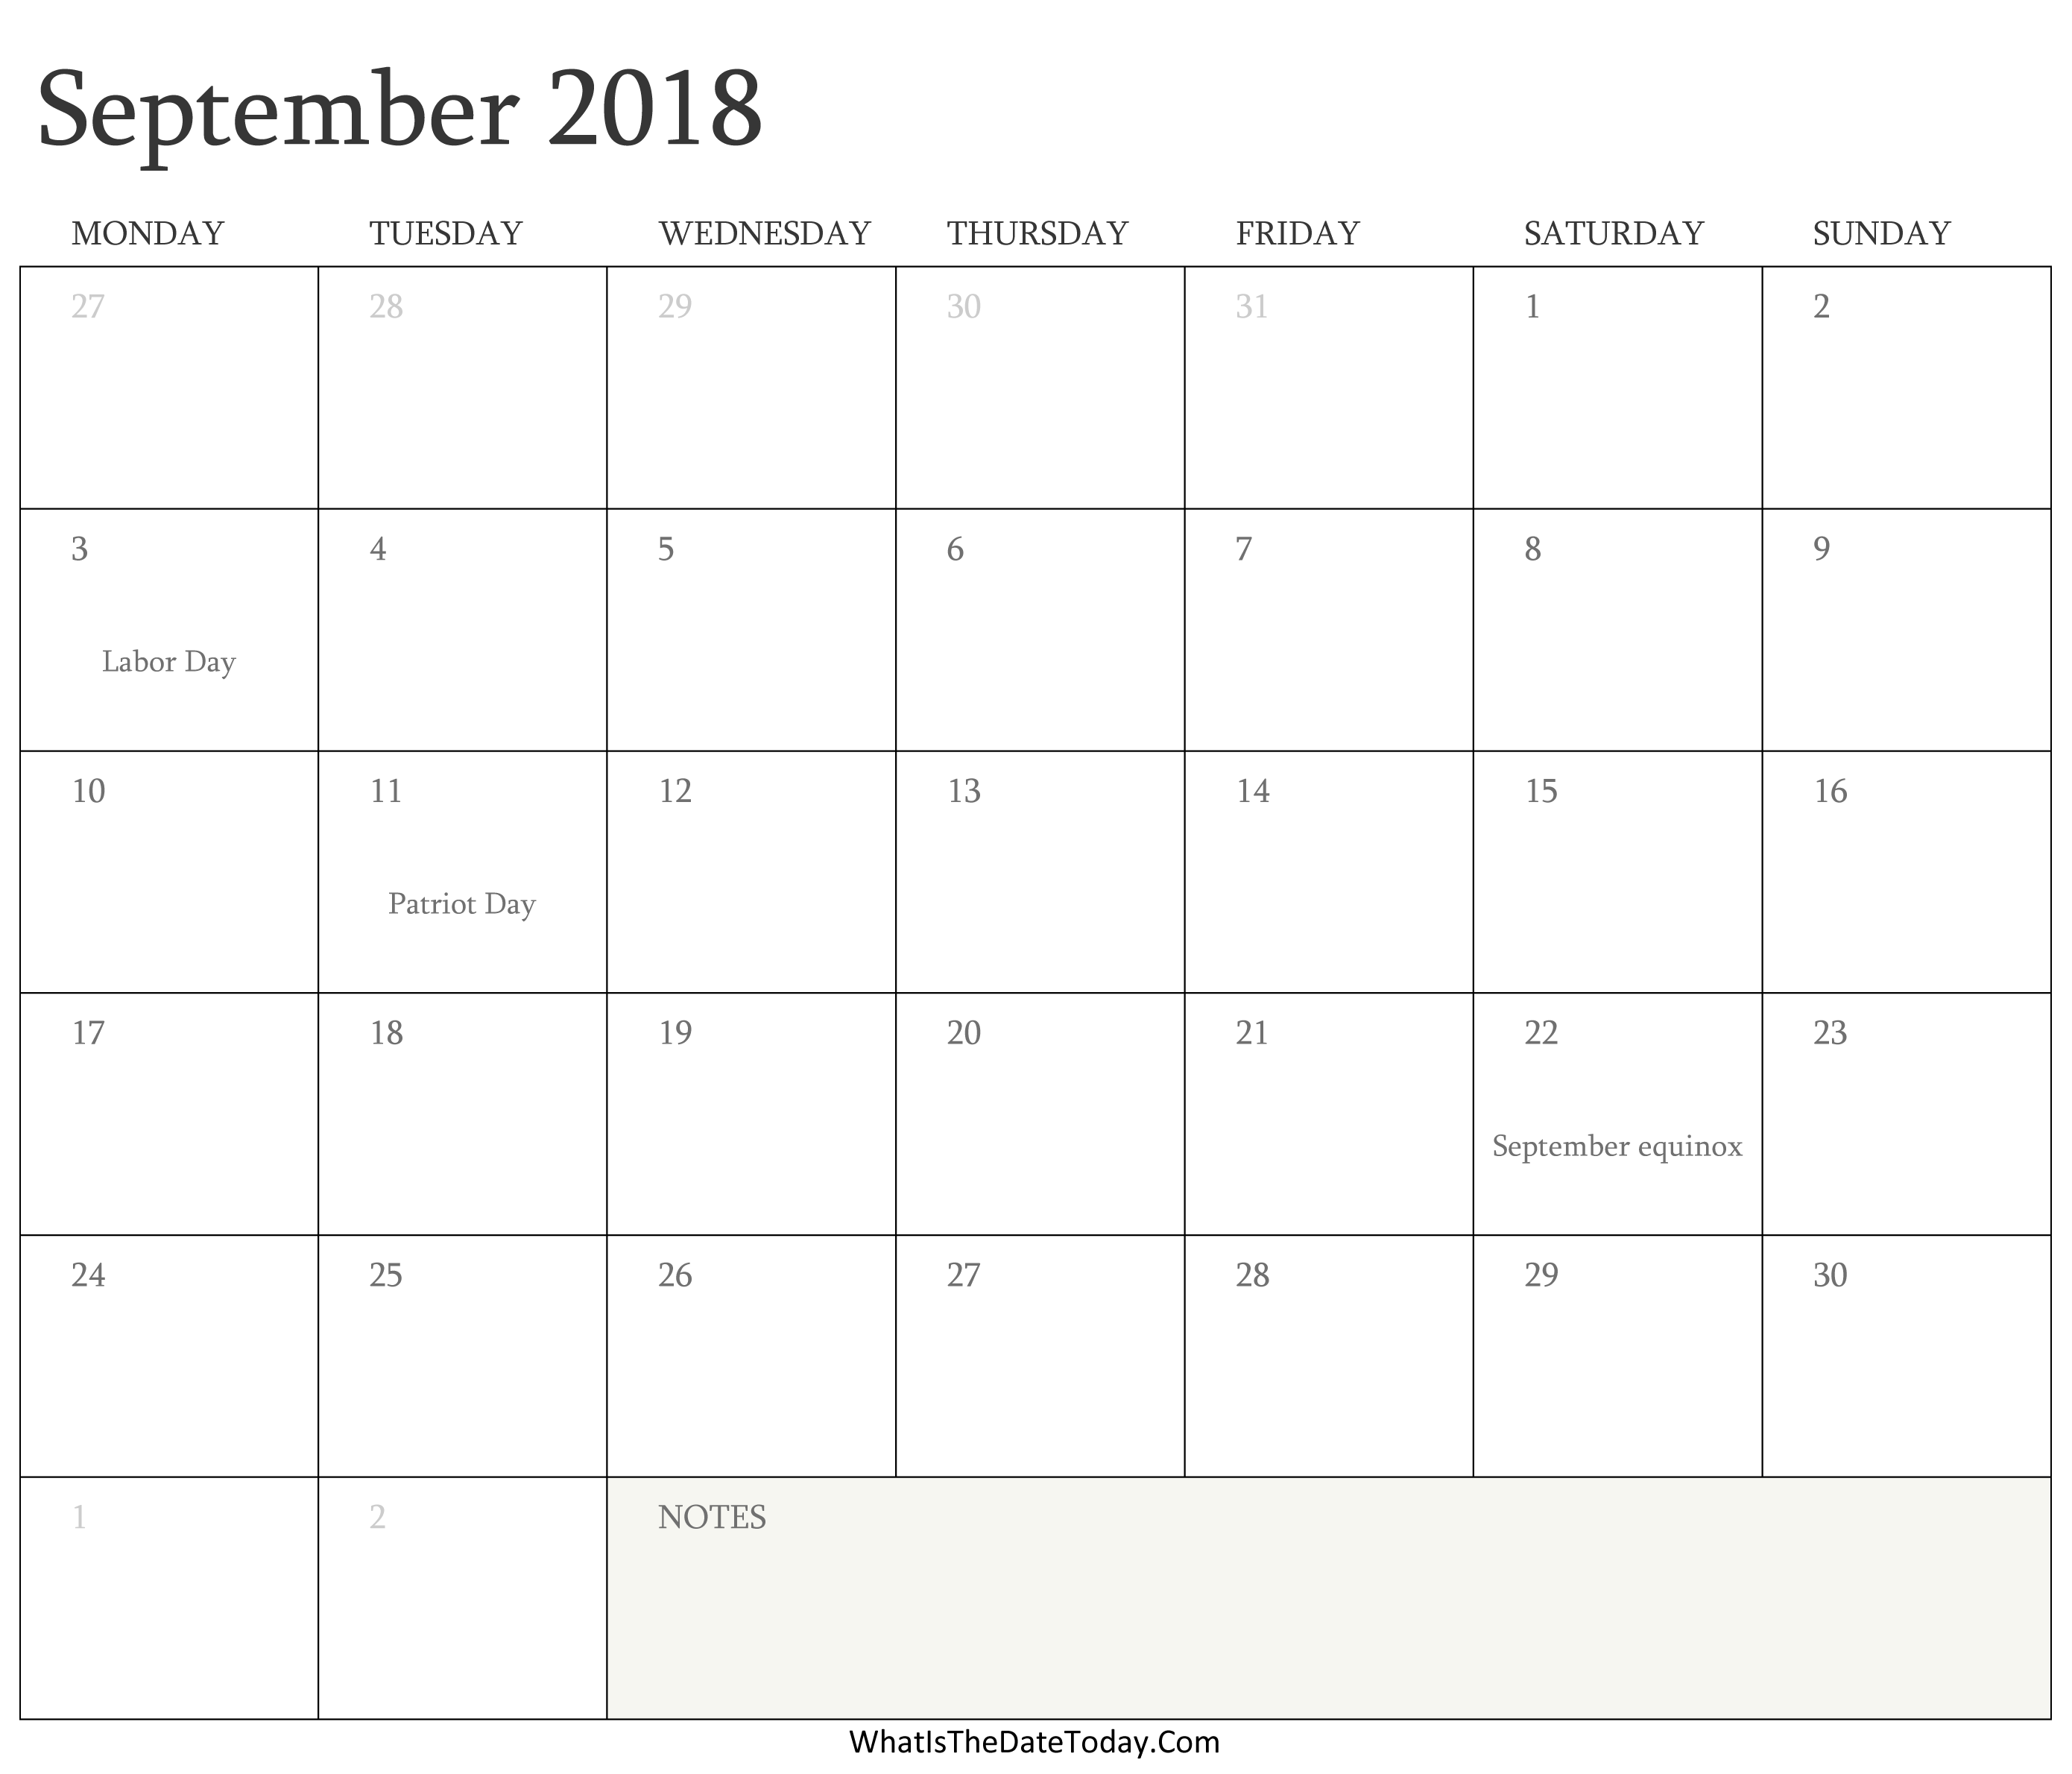 editable-calendar-september-2018-with-holidays-whatisthedatetoday-com